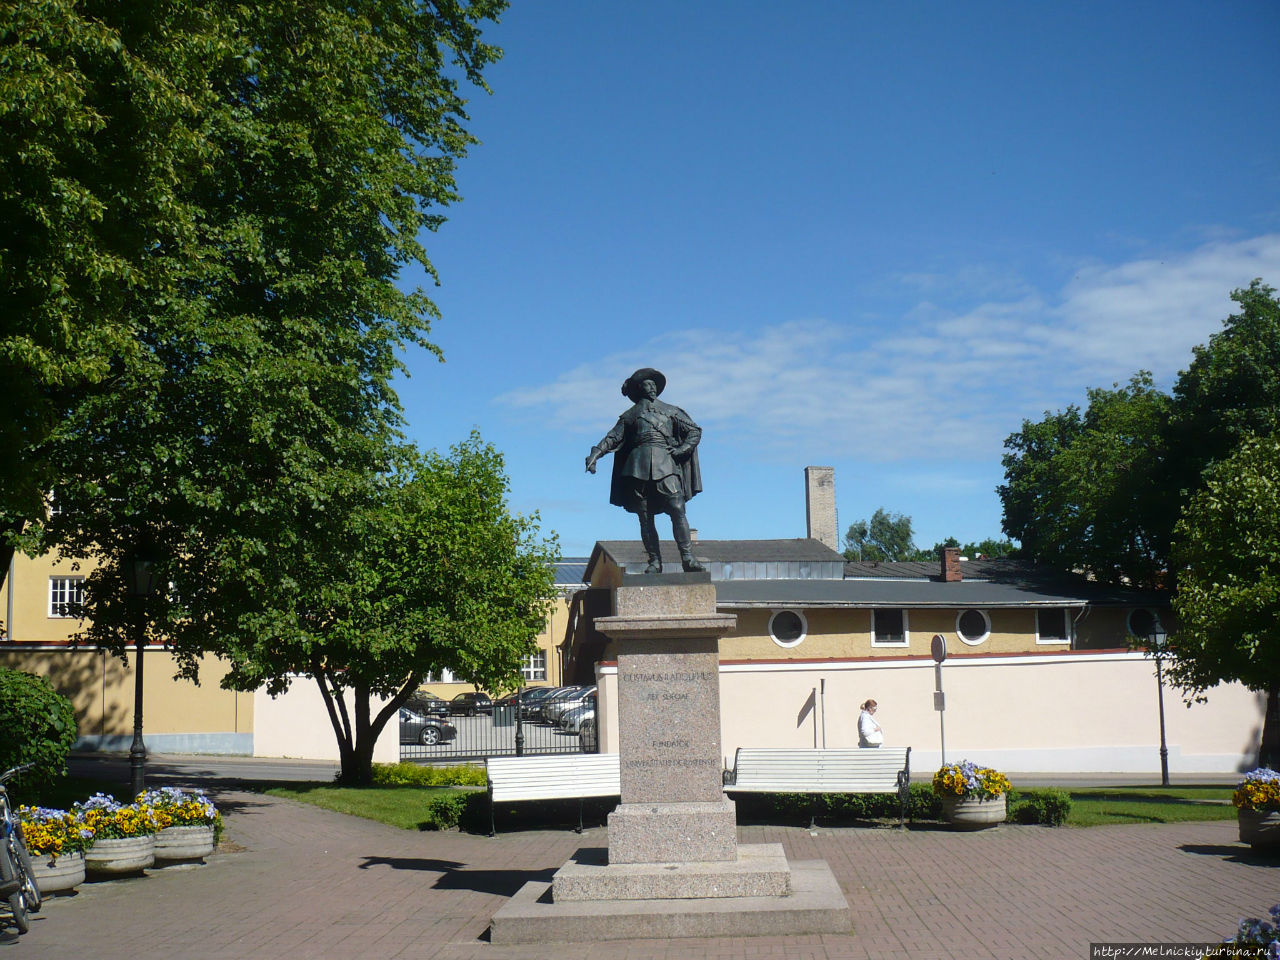 Памятник королю Гутсаву II Адольфу / The monument to king Gutsave II Adolf